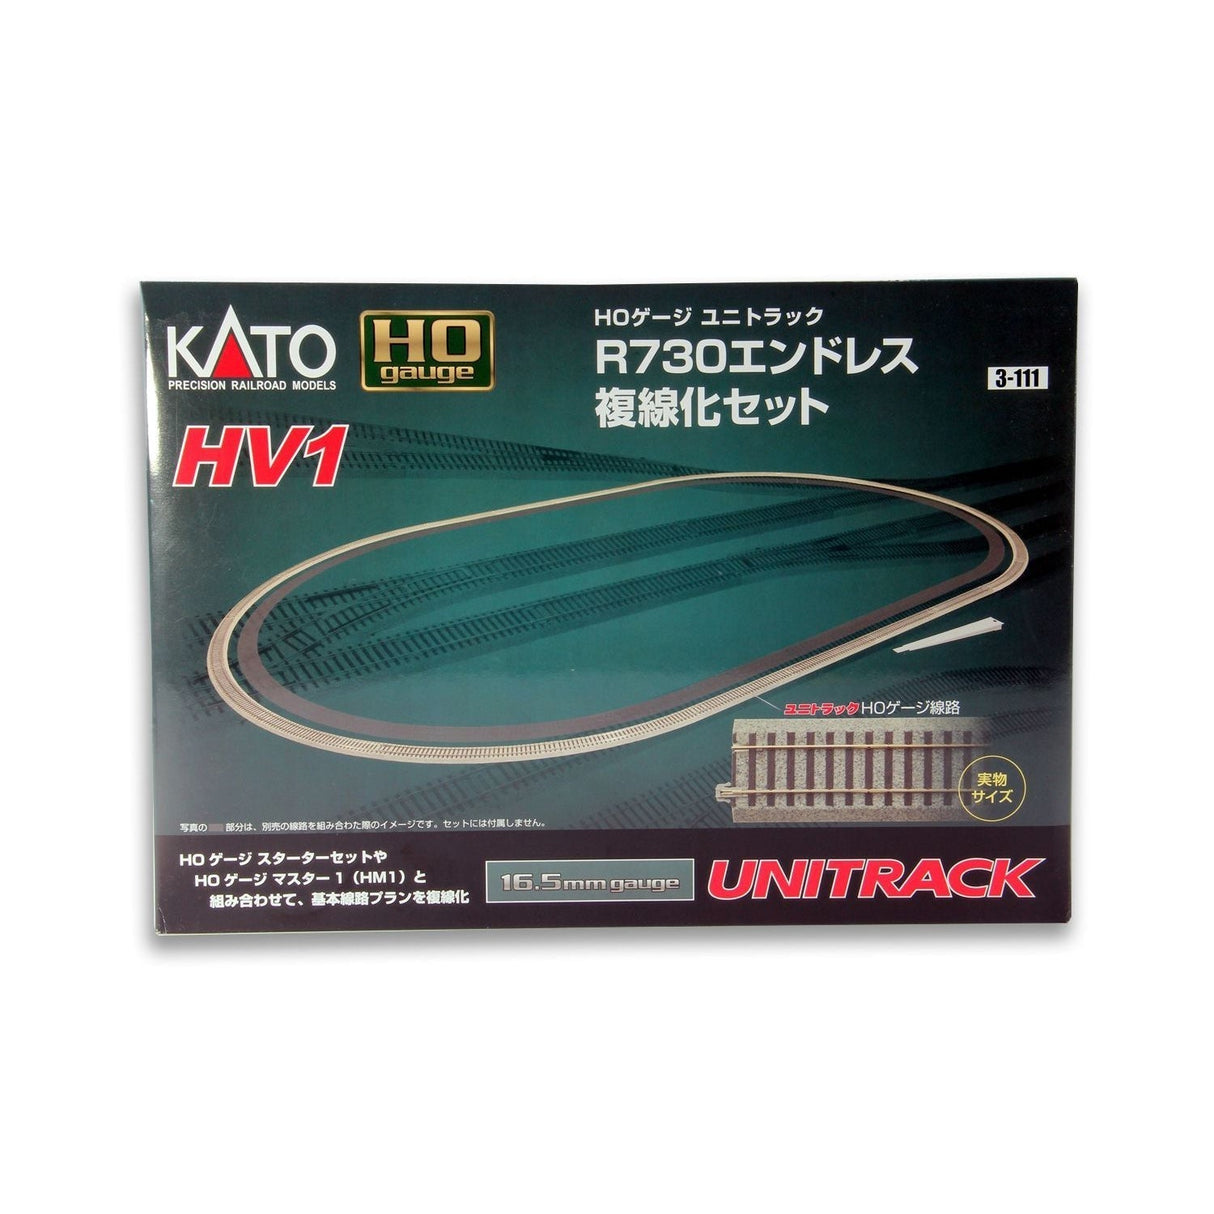 Kato HO Scale HV-1 R730mm Unitrack Track Set for Double Tracking HM-1